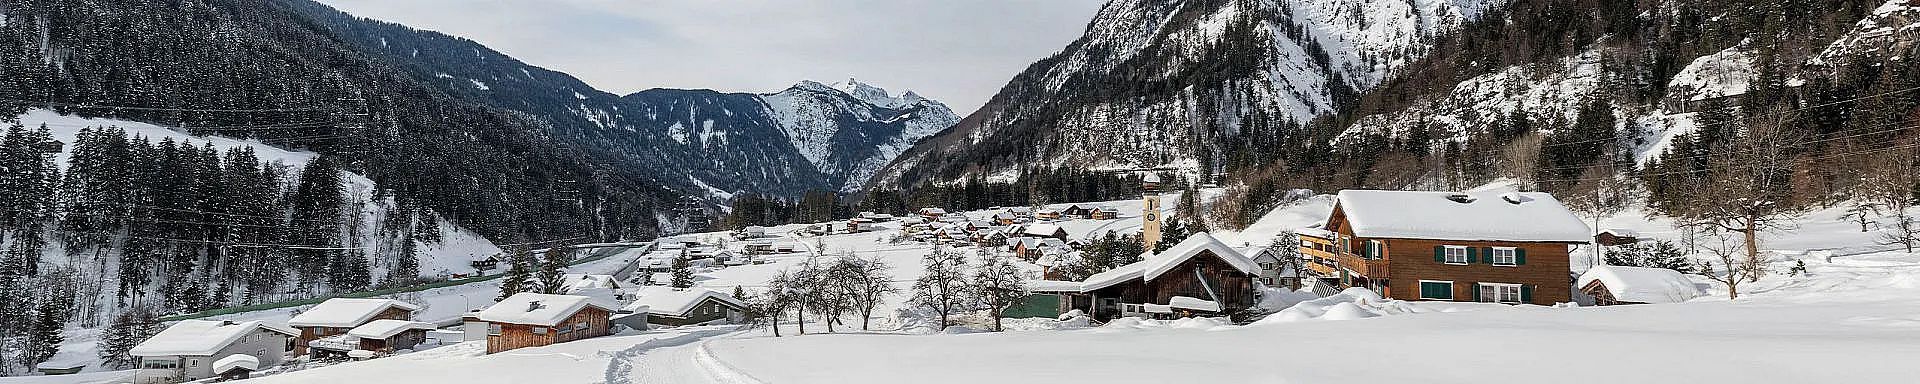 klostertal-winter-ort-wald